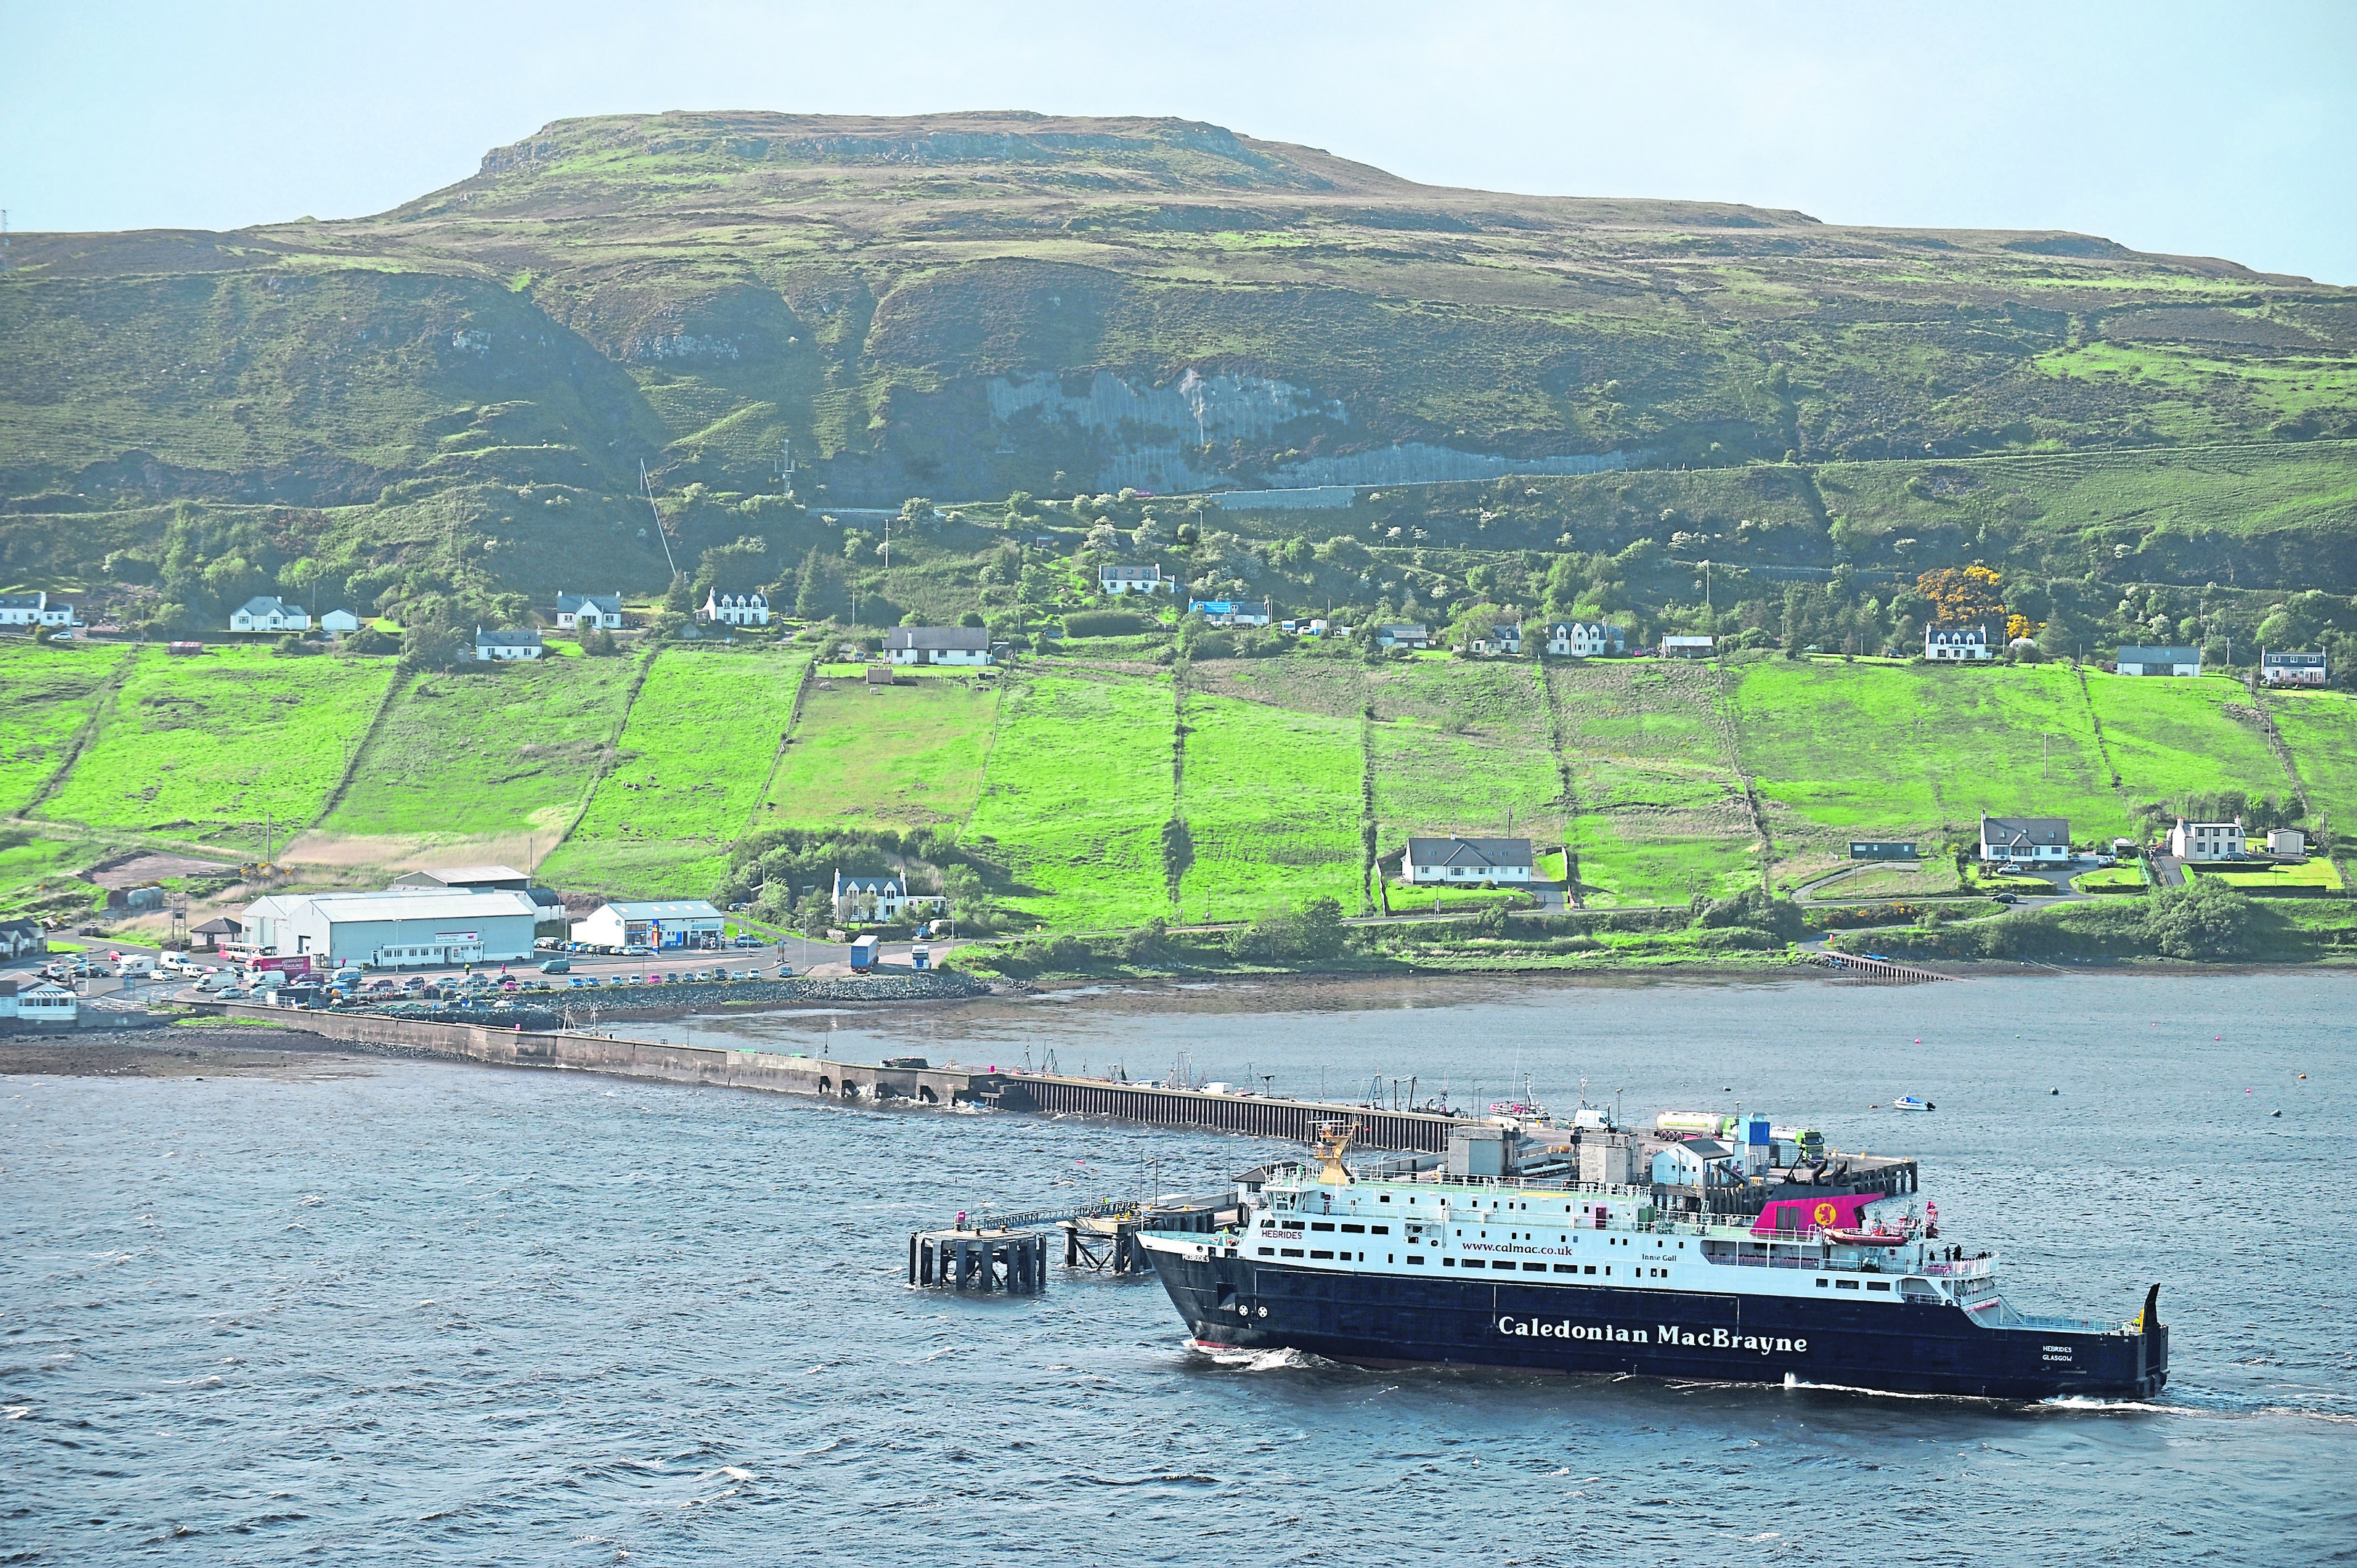 The Caledonian MacBrayne ferry.